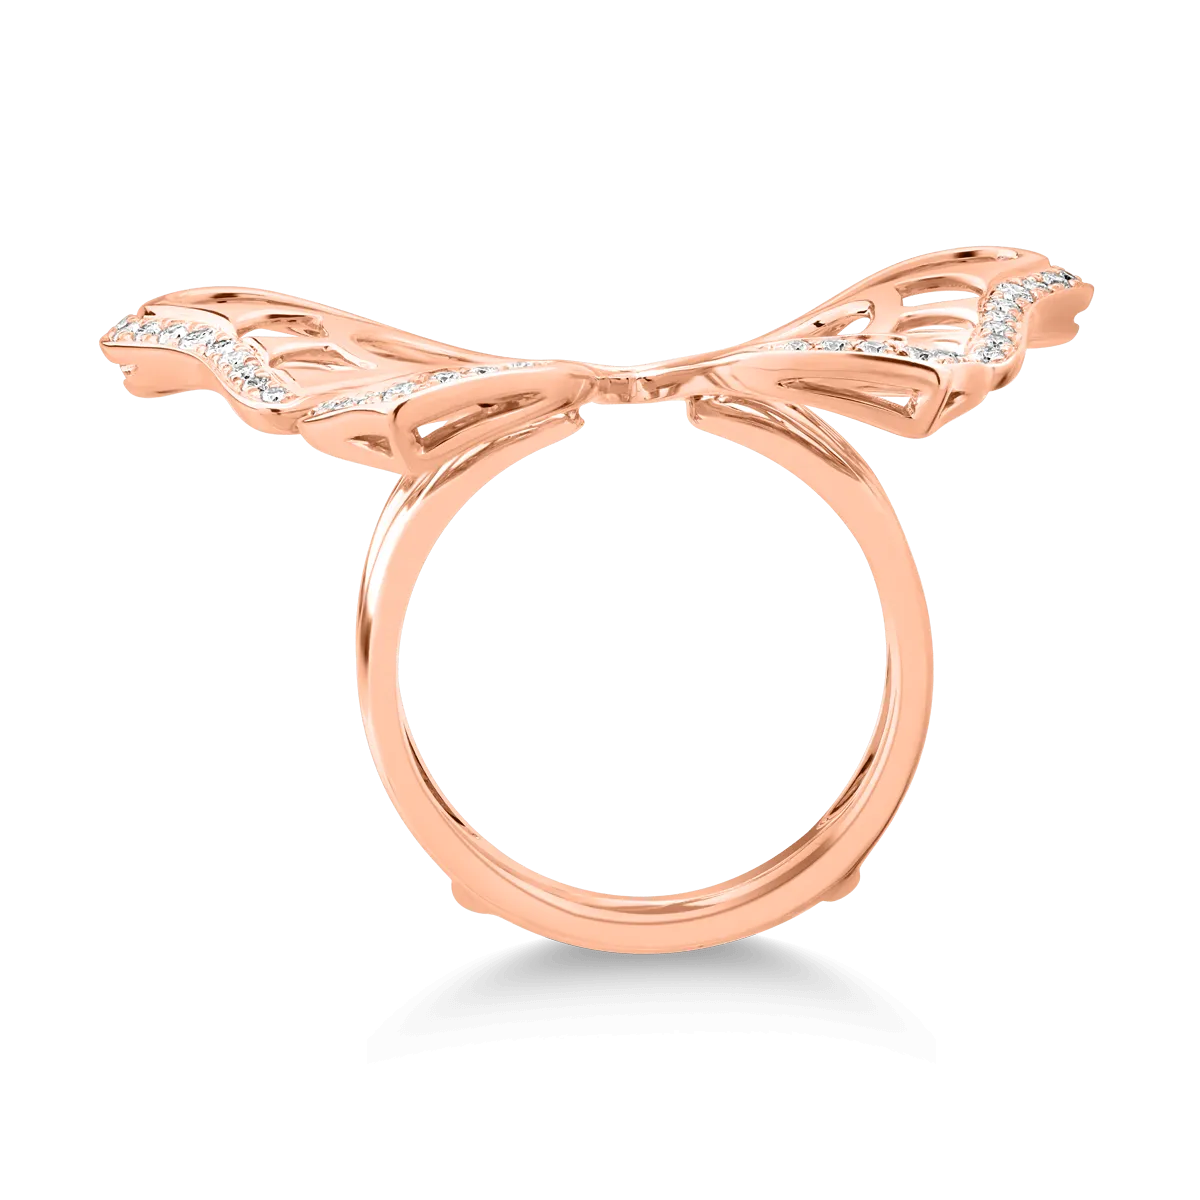 18K rose gold ring with 11.4ct rose quartz and 0.37ct diamonds